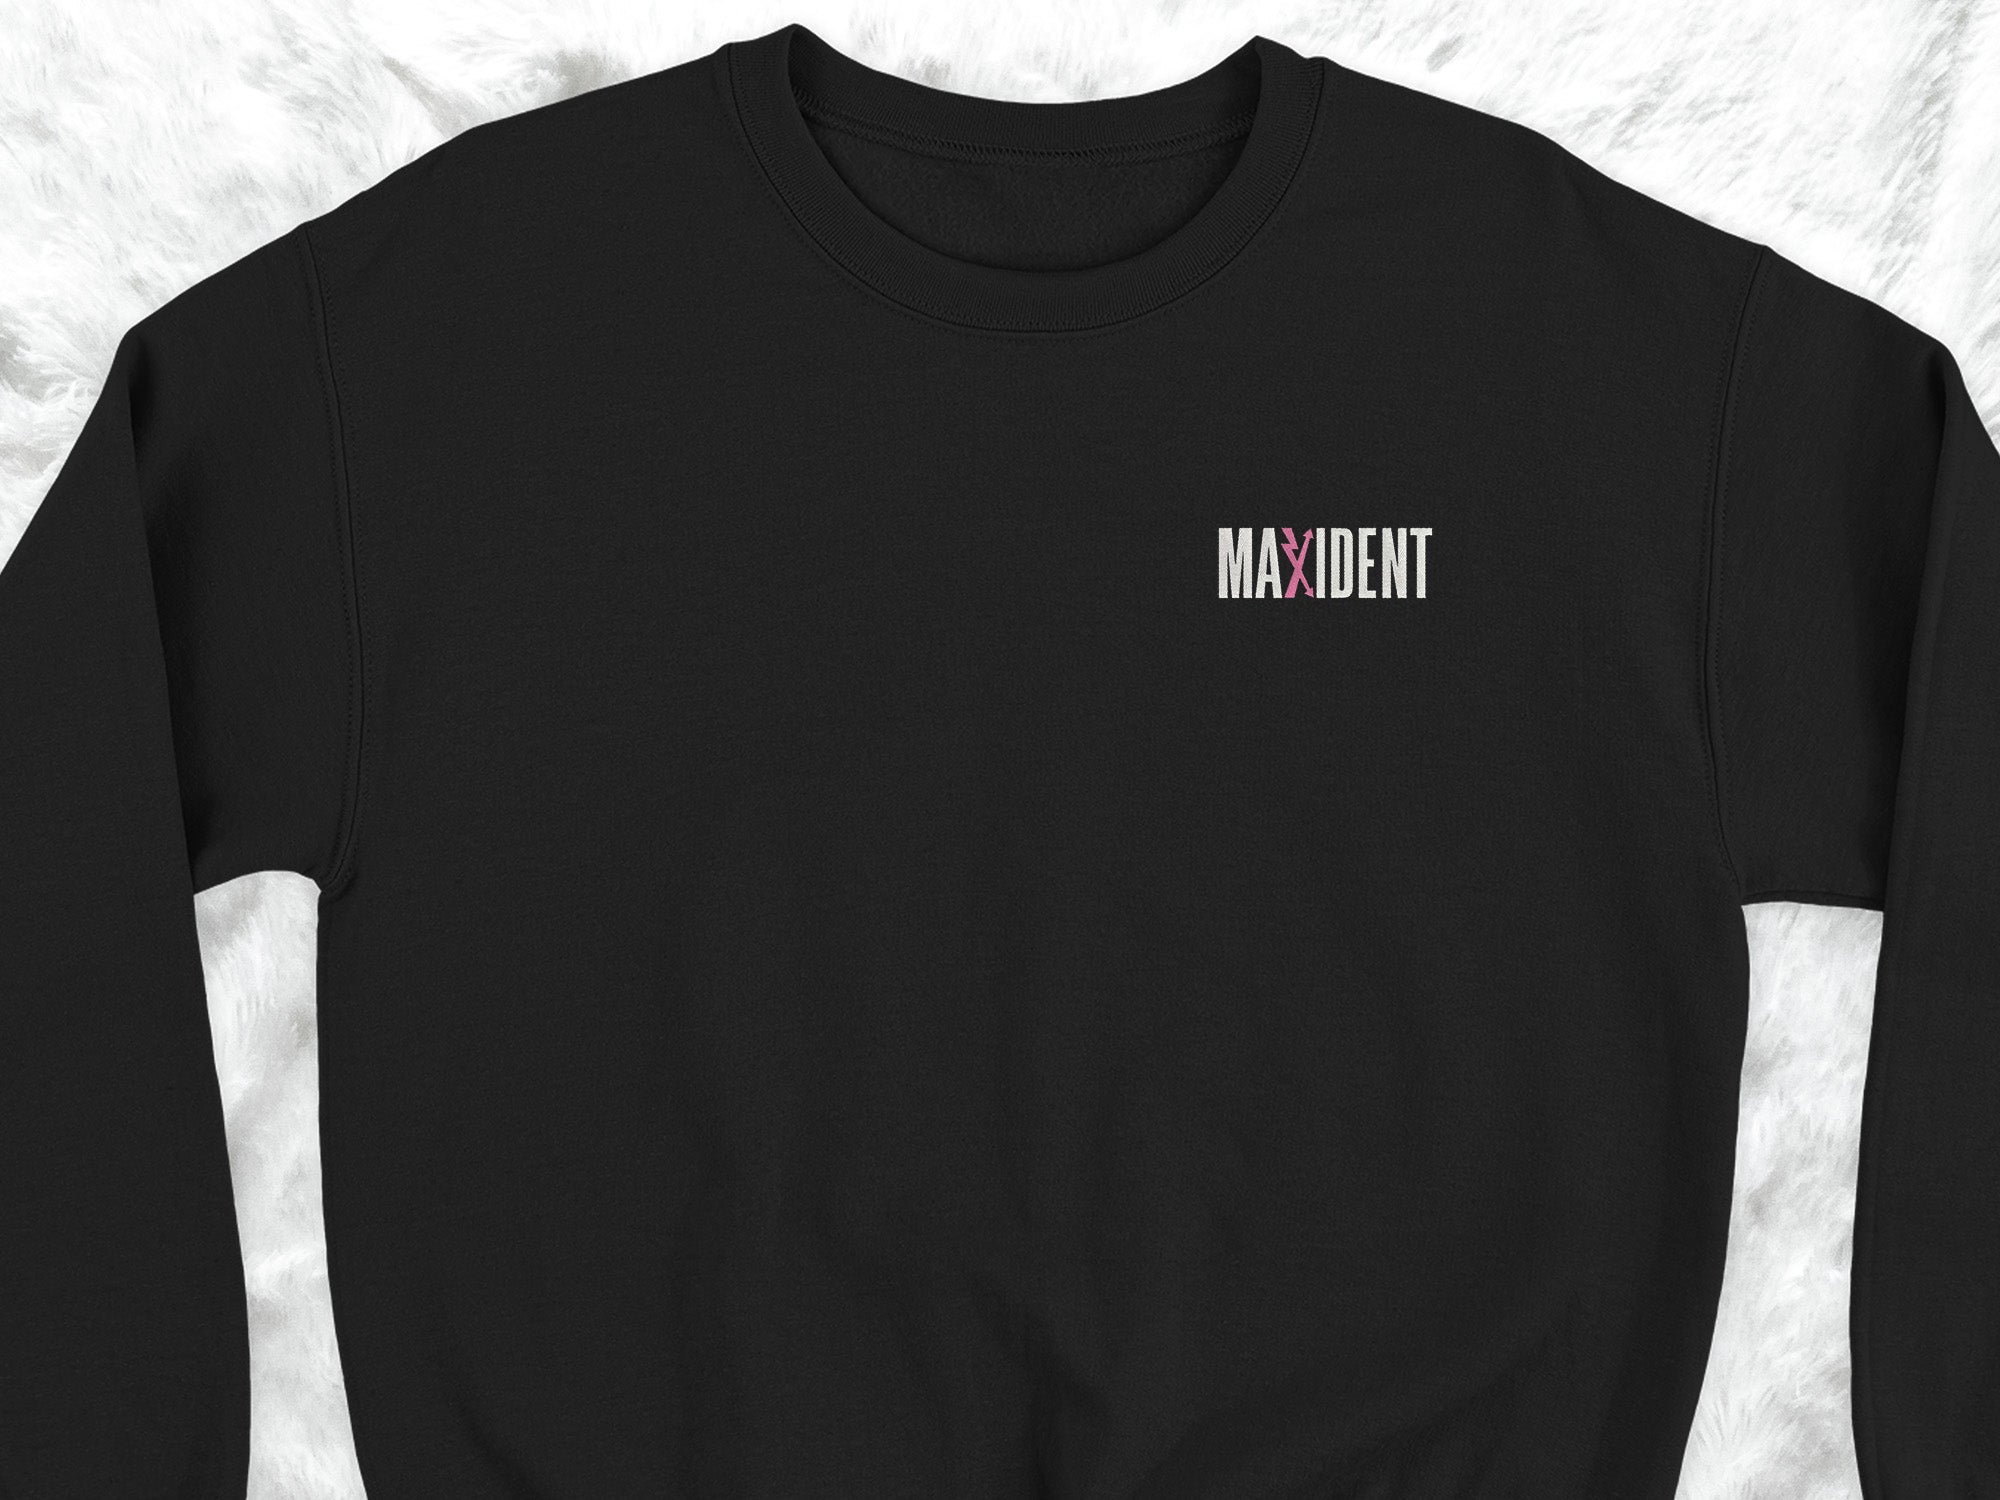 Maxident Embroidery Shirts and Sweatshirts